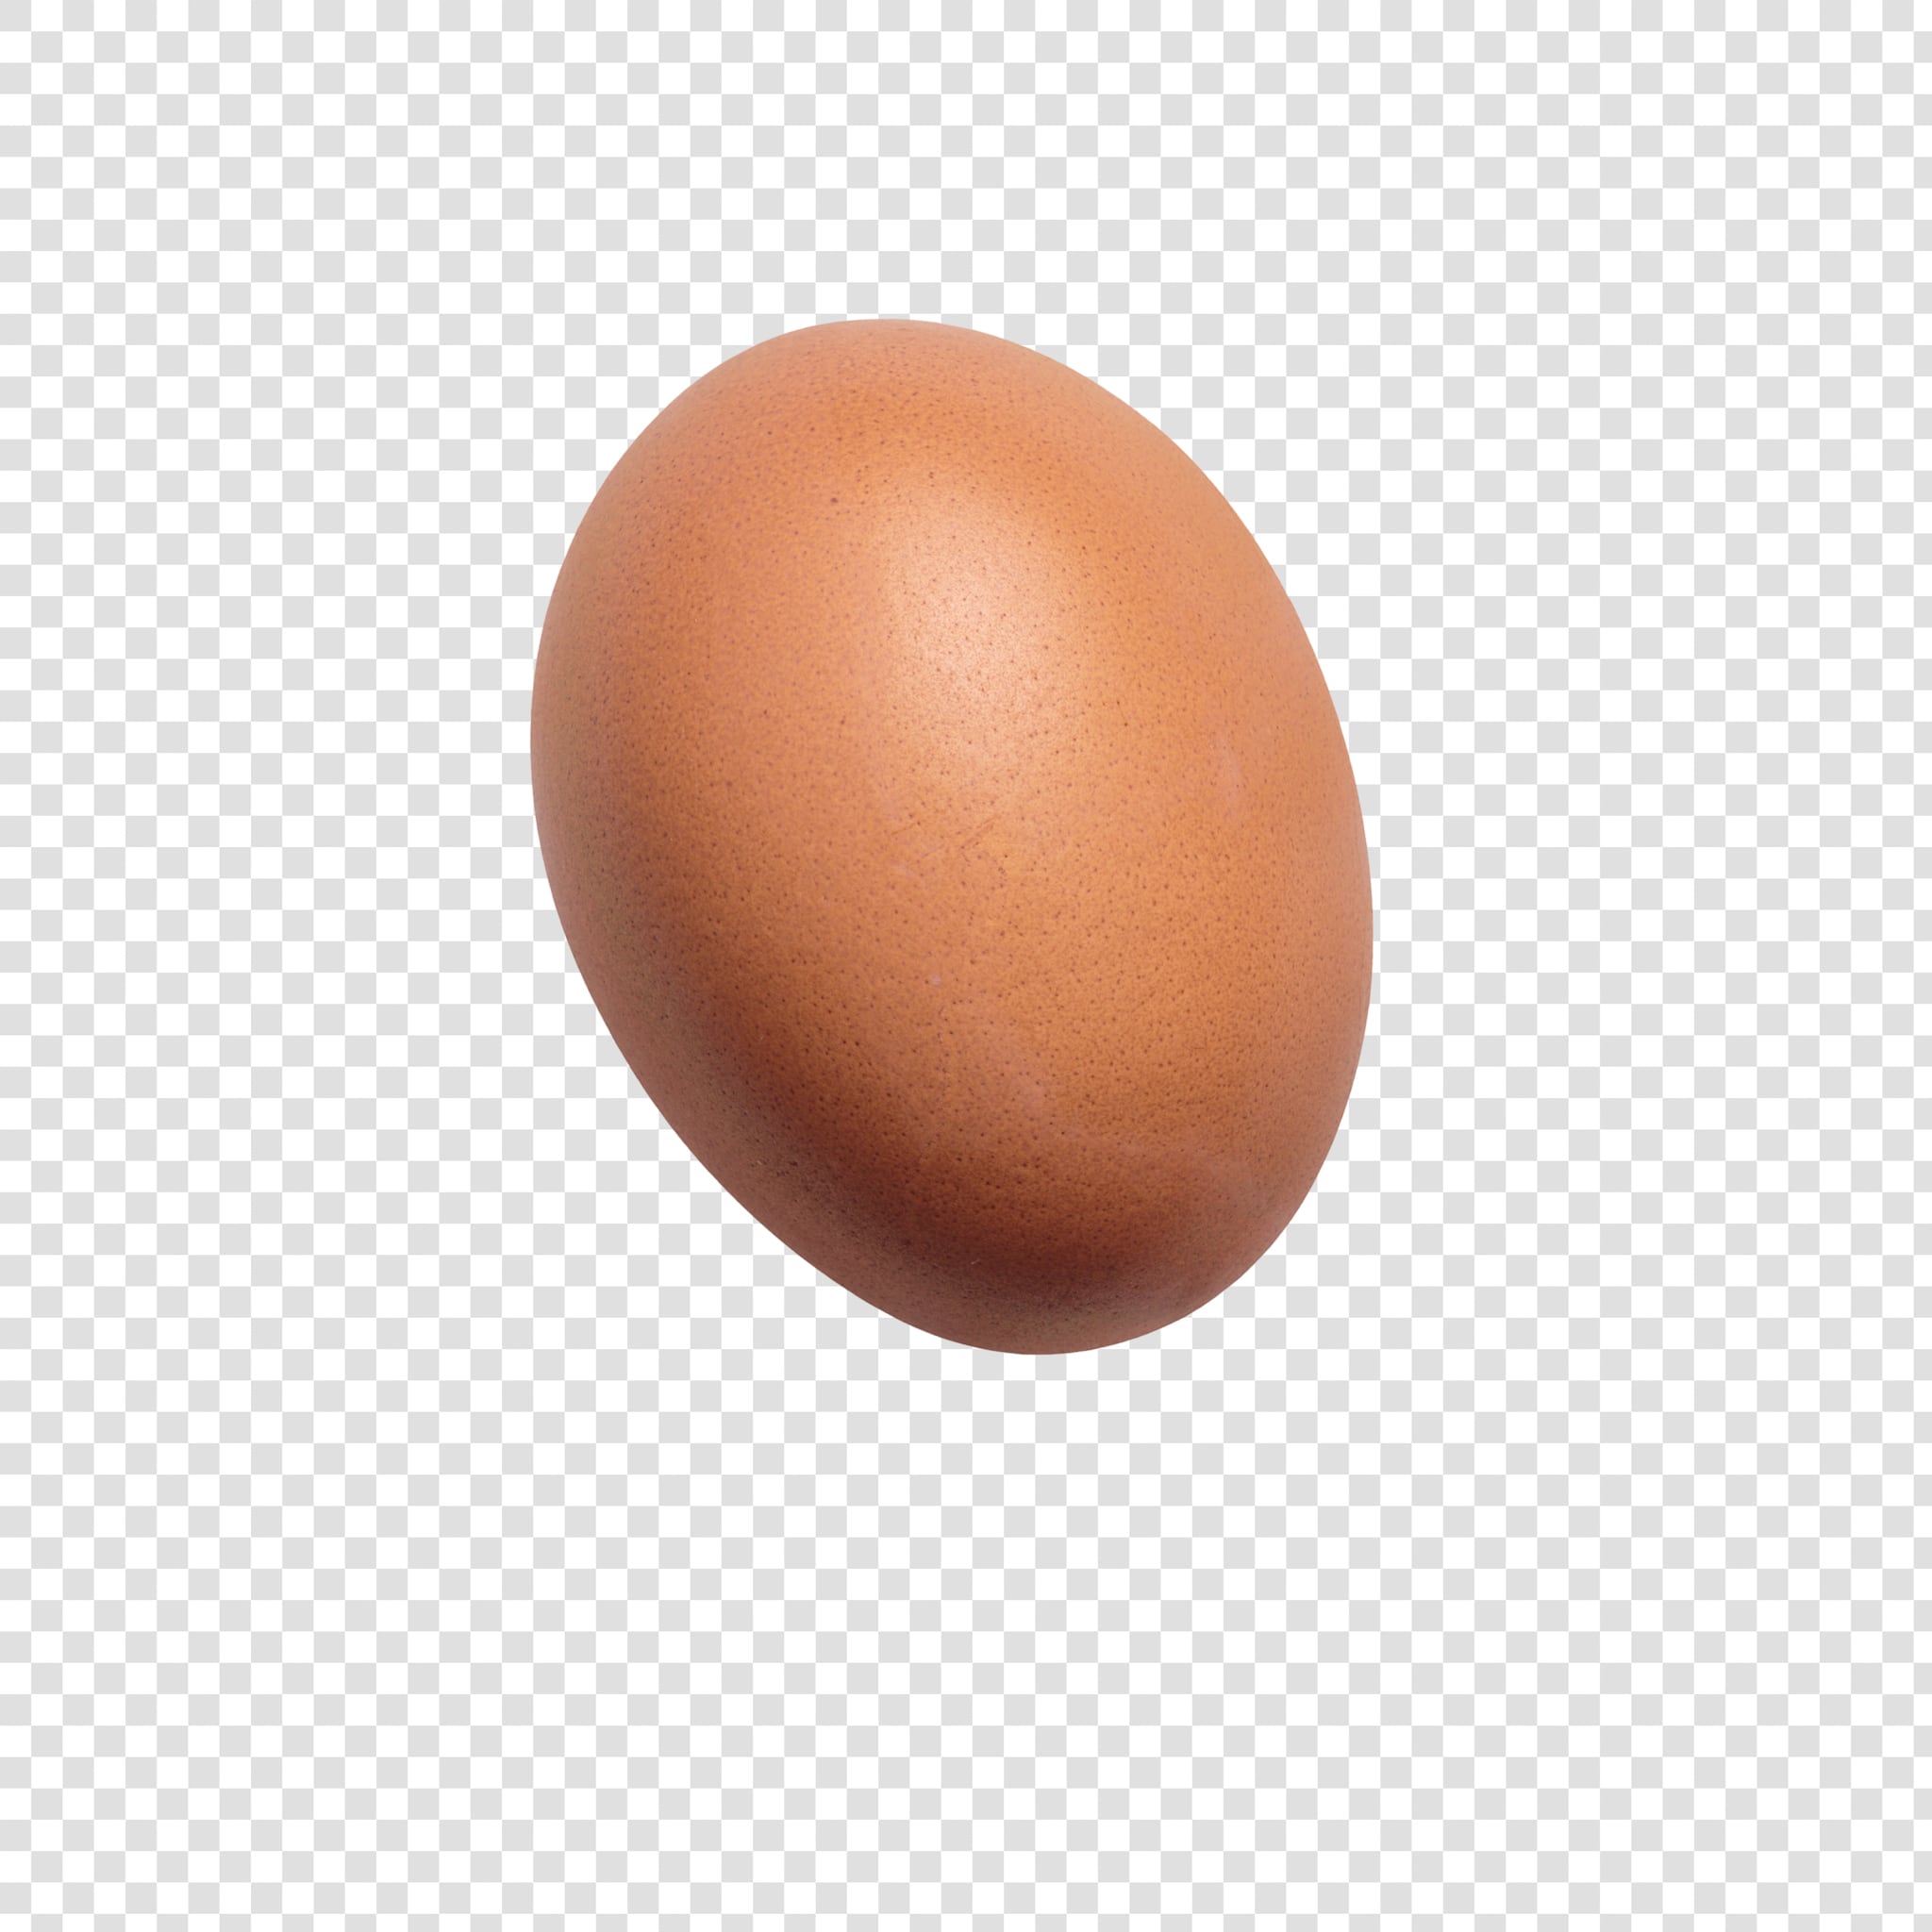 Egg PSD layered image